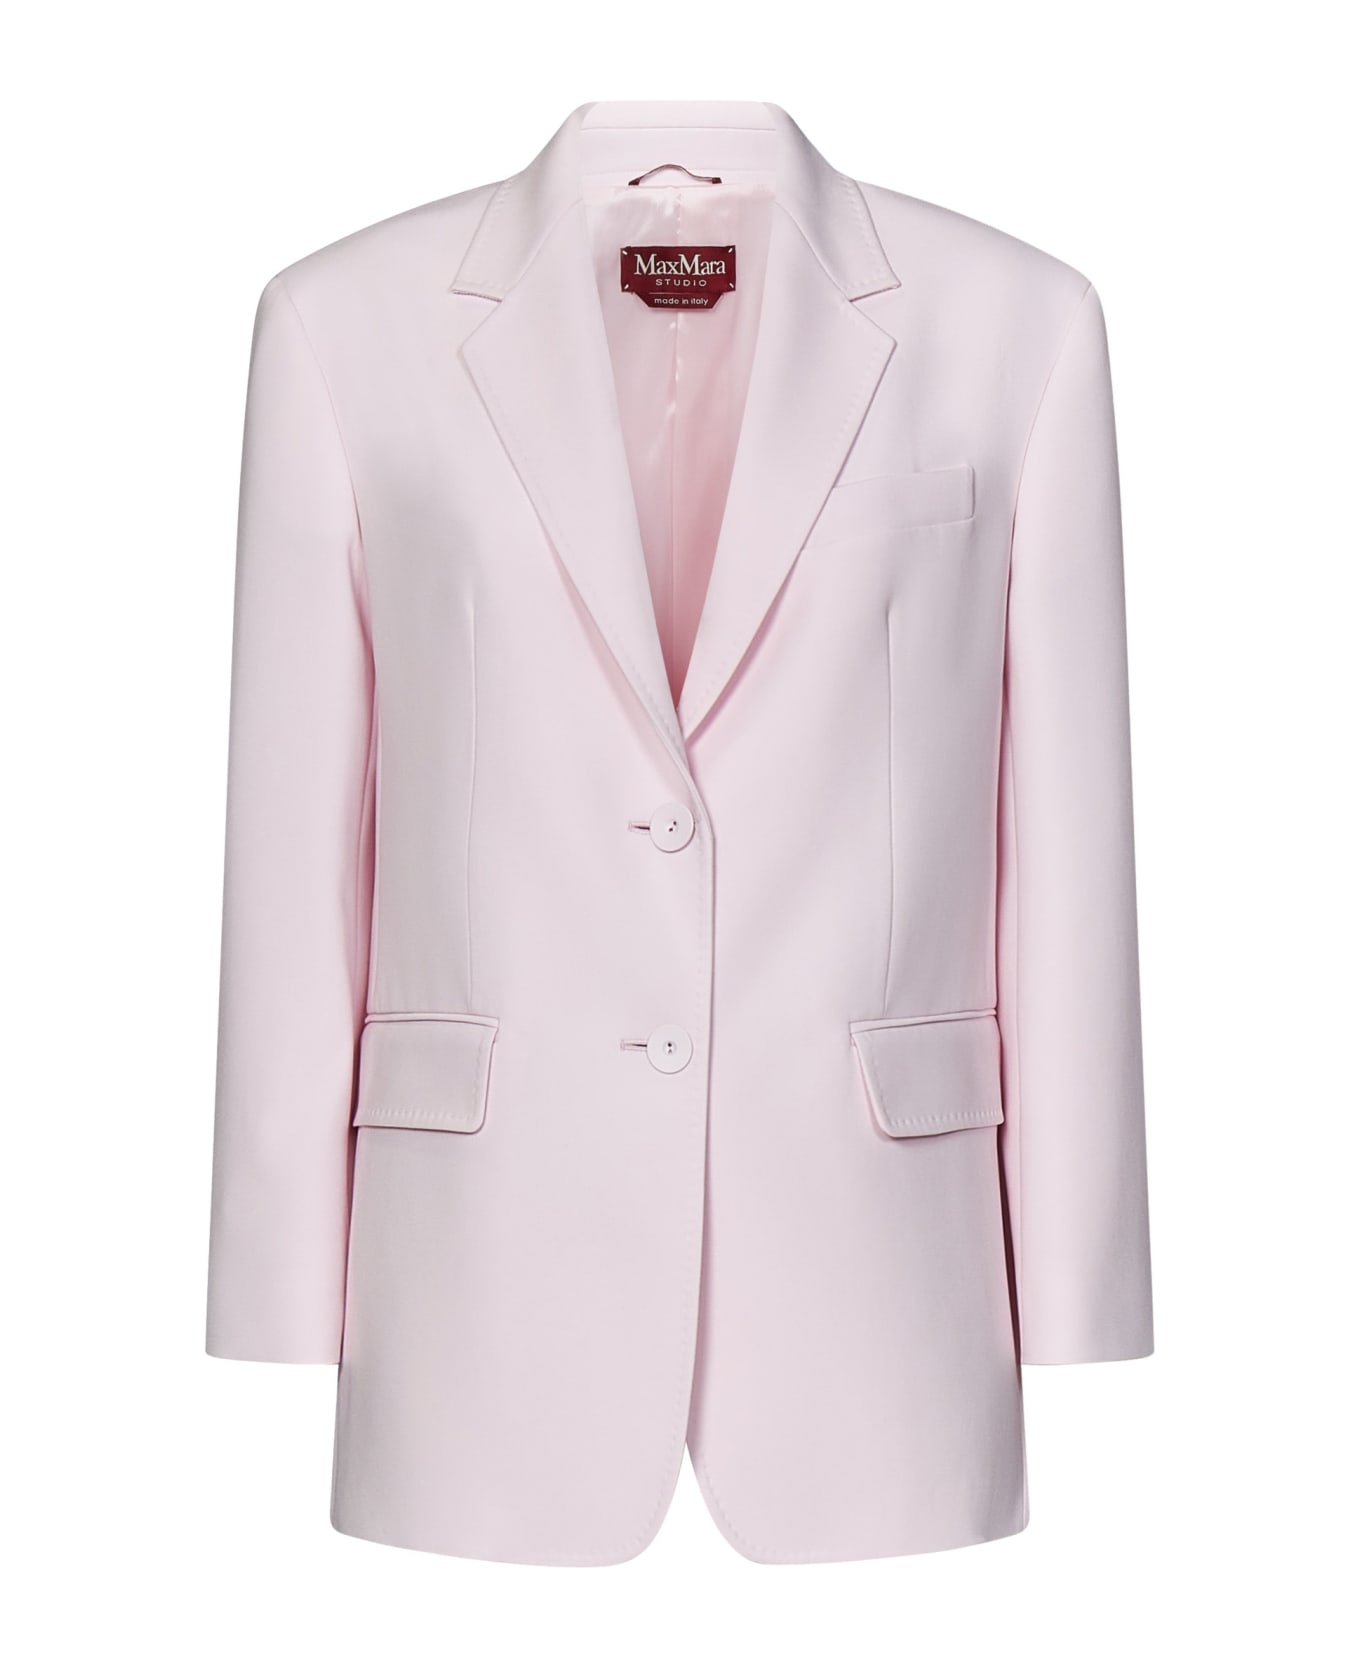 Max Mara Maxmara Studio Suit - Pink